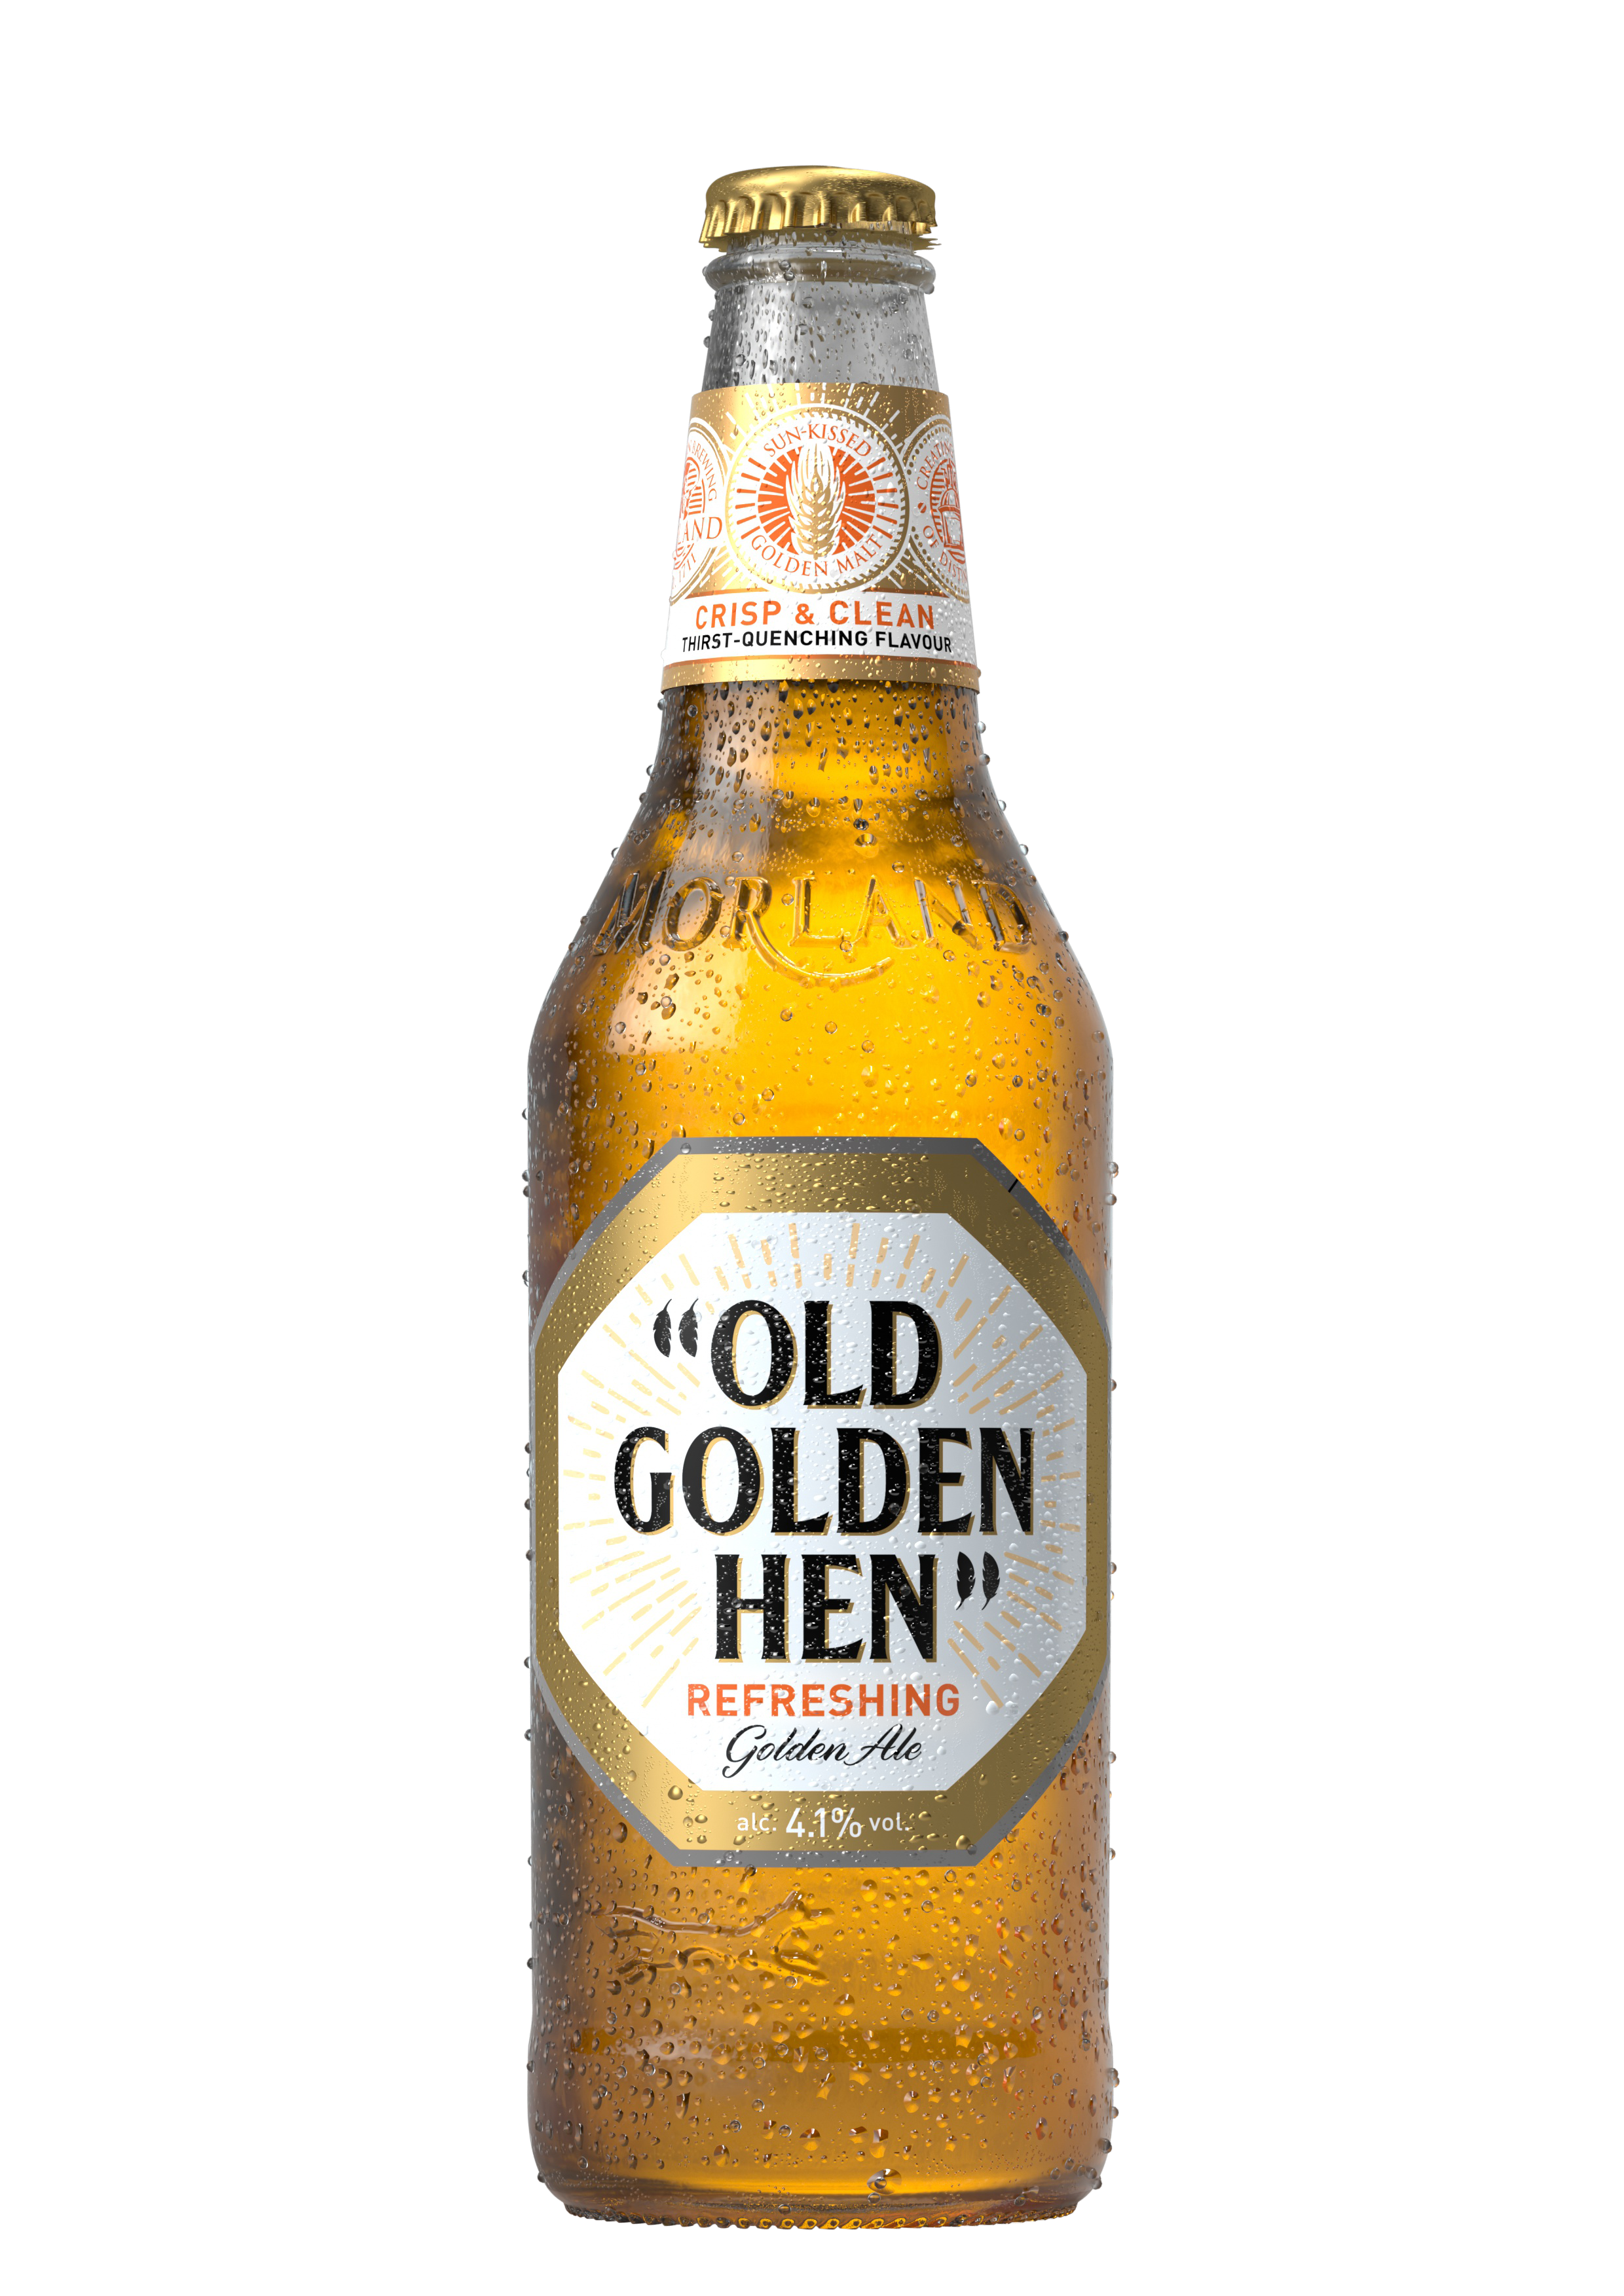 Old Golden Hen offers hot prizes for summer